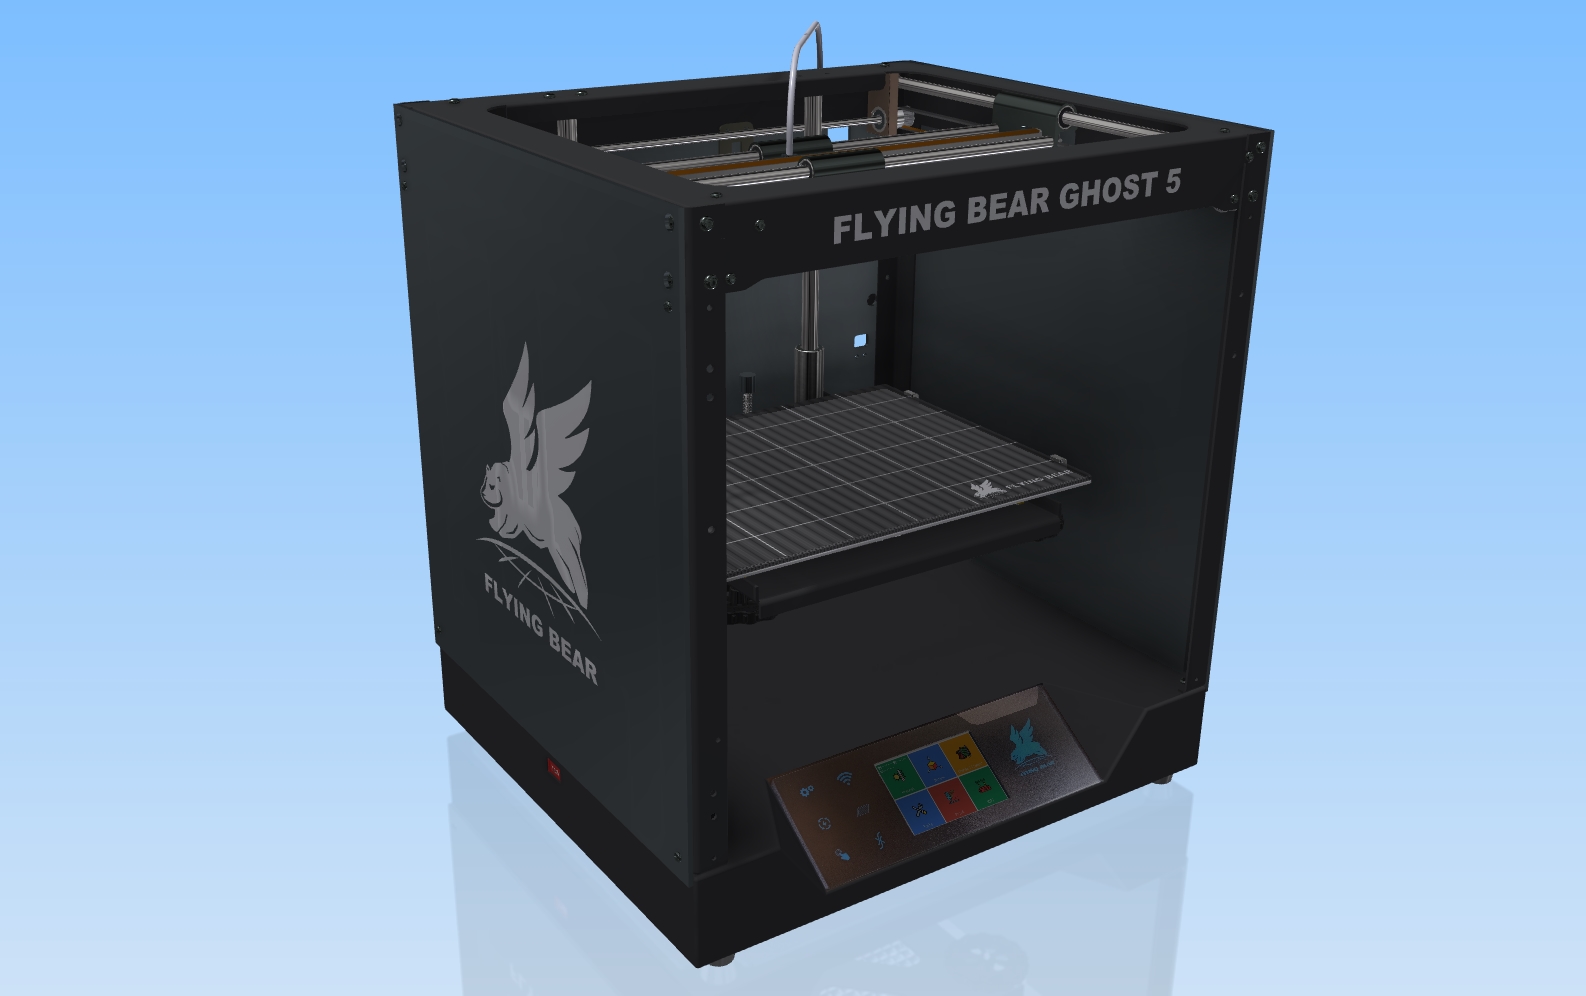 FlyingBear Ghost 5 3D Model - FACTORY ASSEMBLED